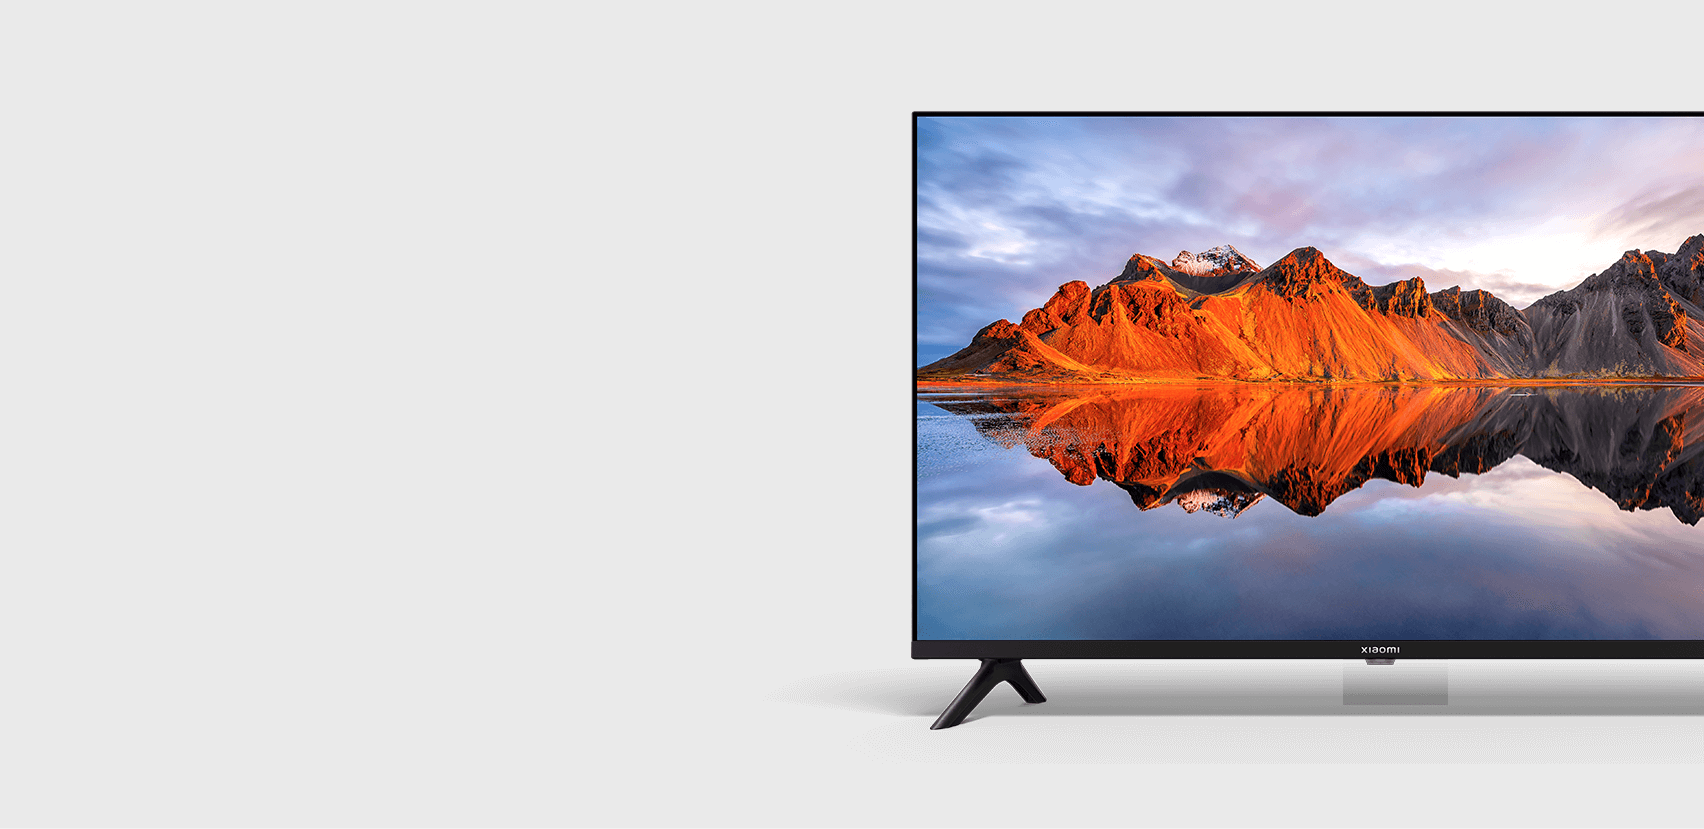 Телевизоры xiaomi размеры